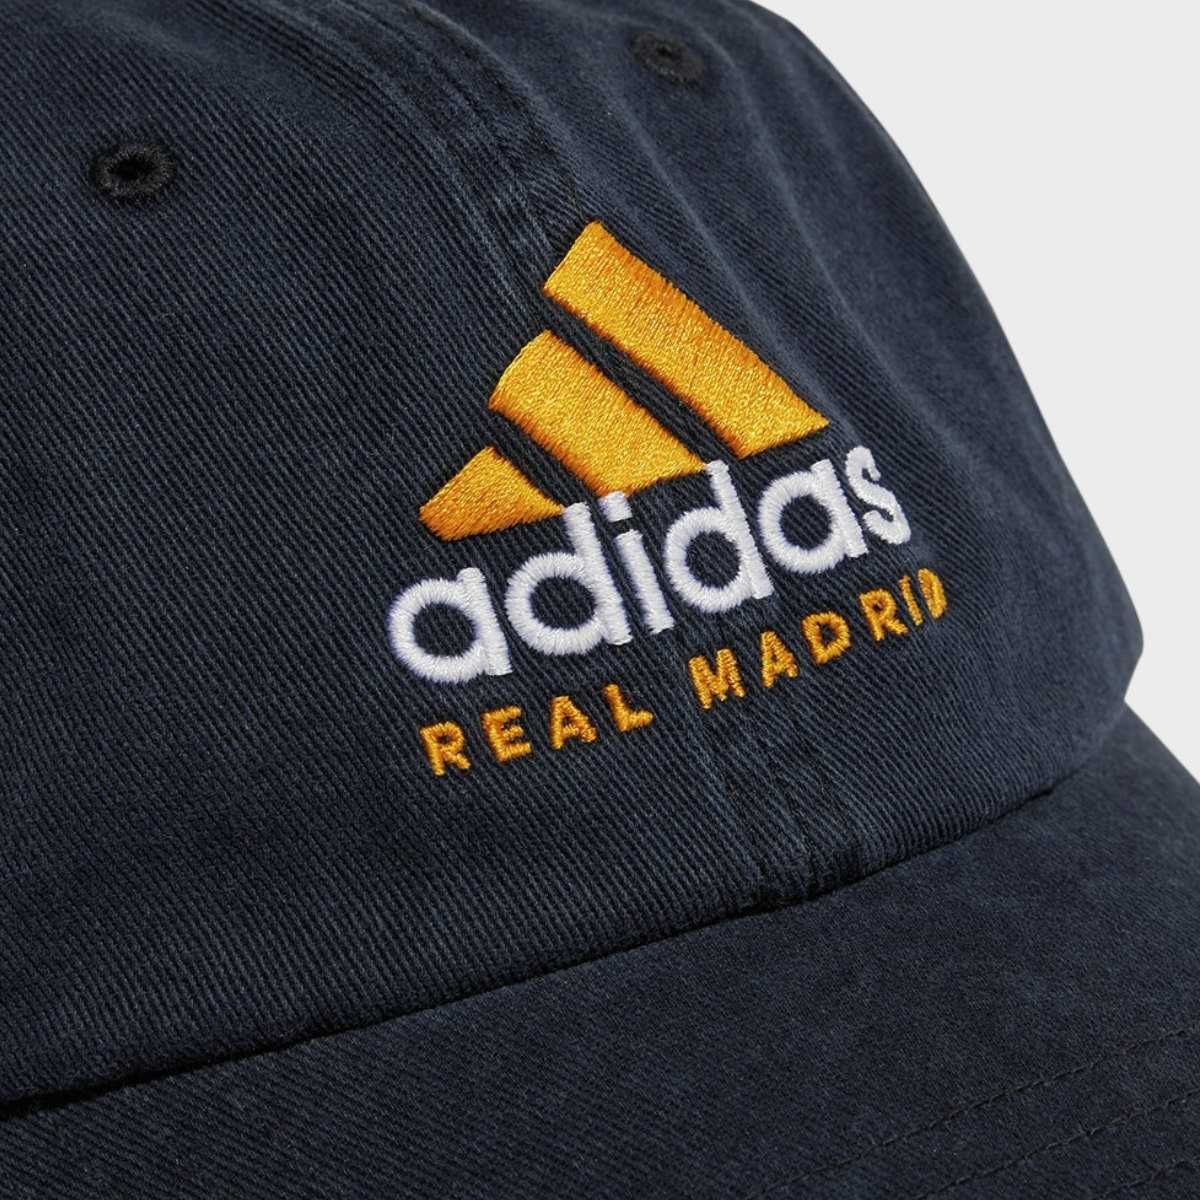 Czapka Adidas Real Madrit Bejsbolówka